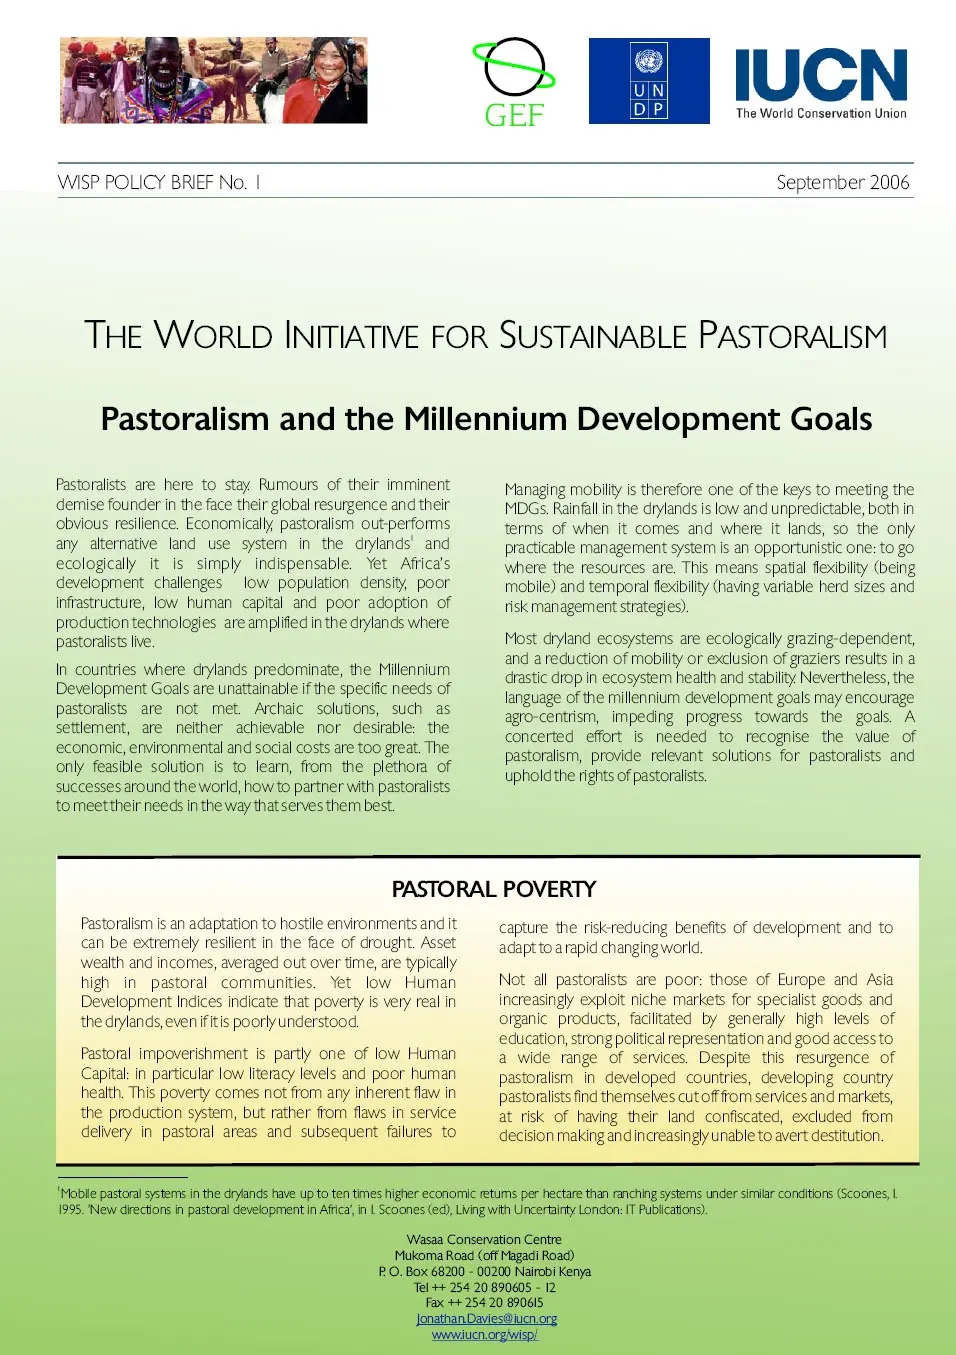 Pastoralism and the Millenium Development Goals